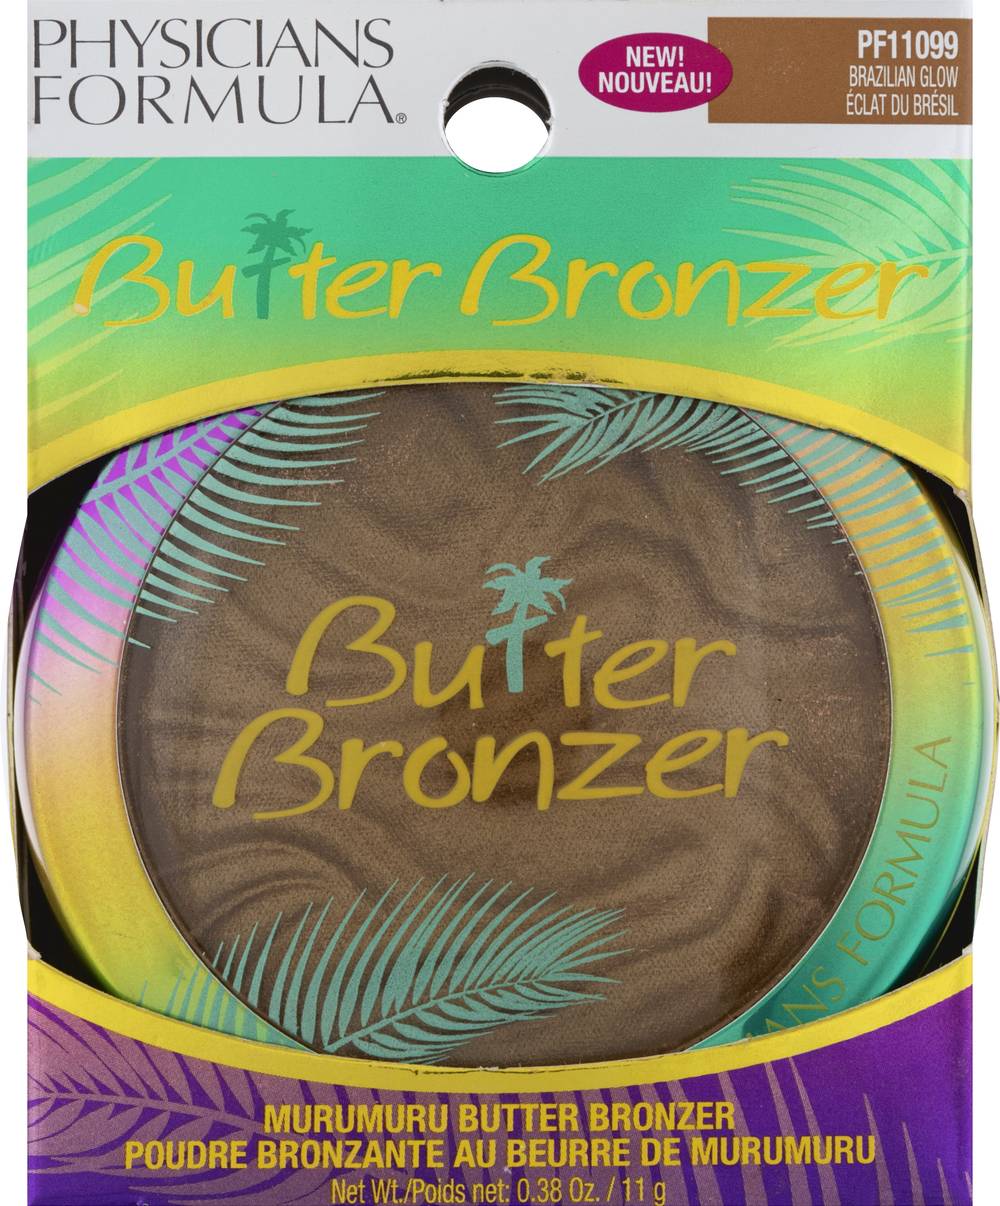 Physicians Formula Murumuru Butter Bronzer (pf11099 brazilian glow)